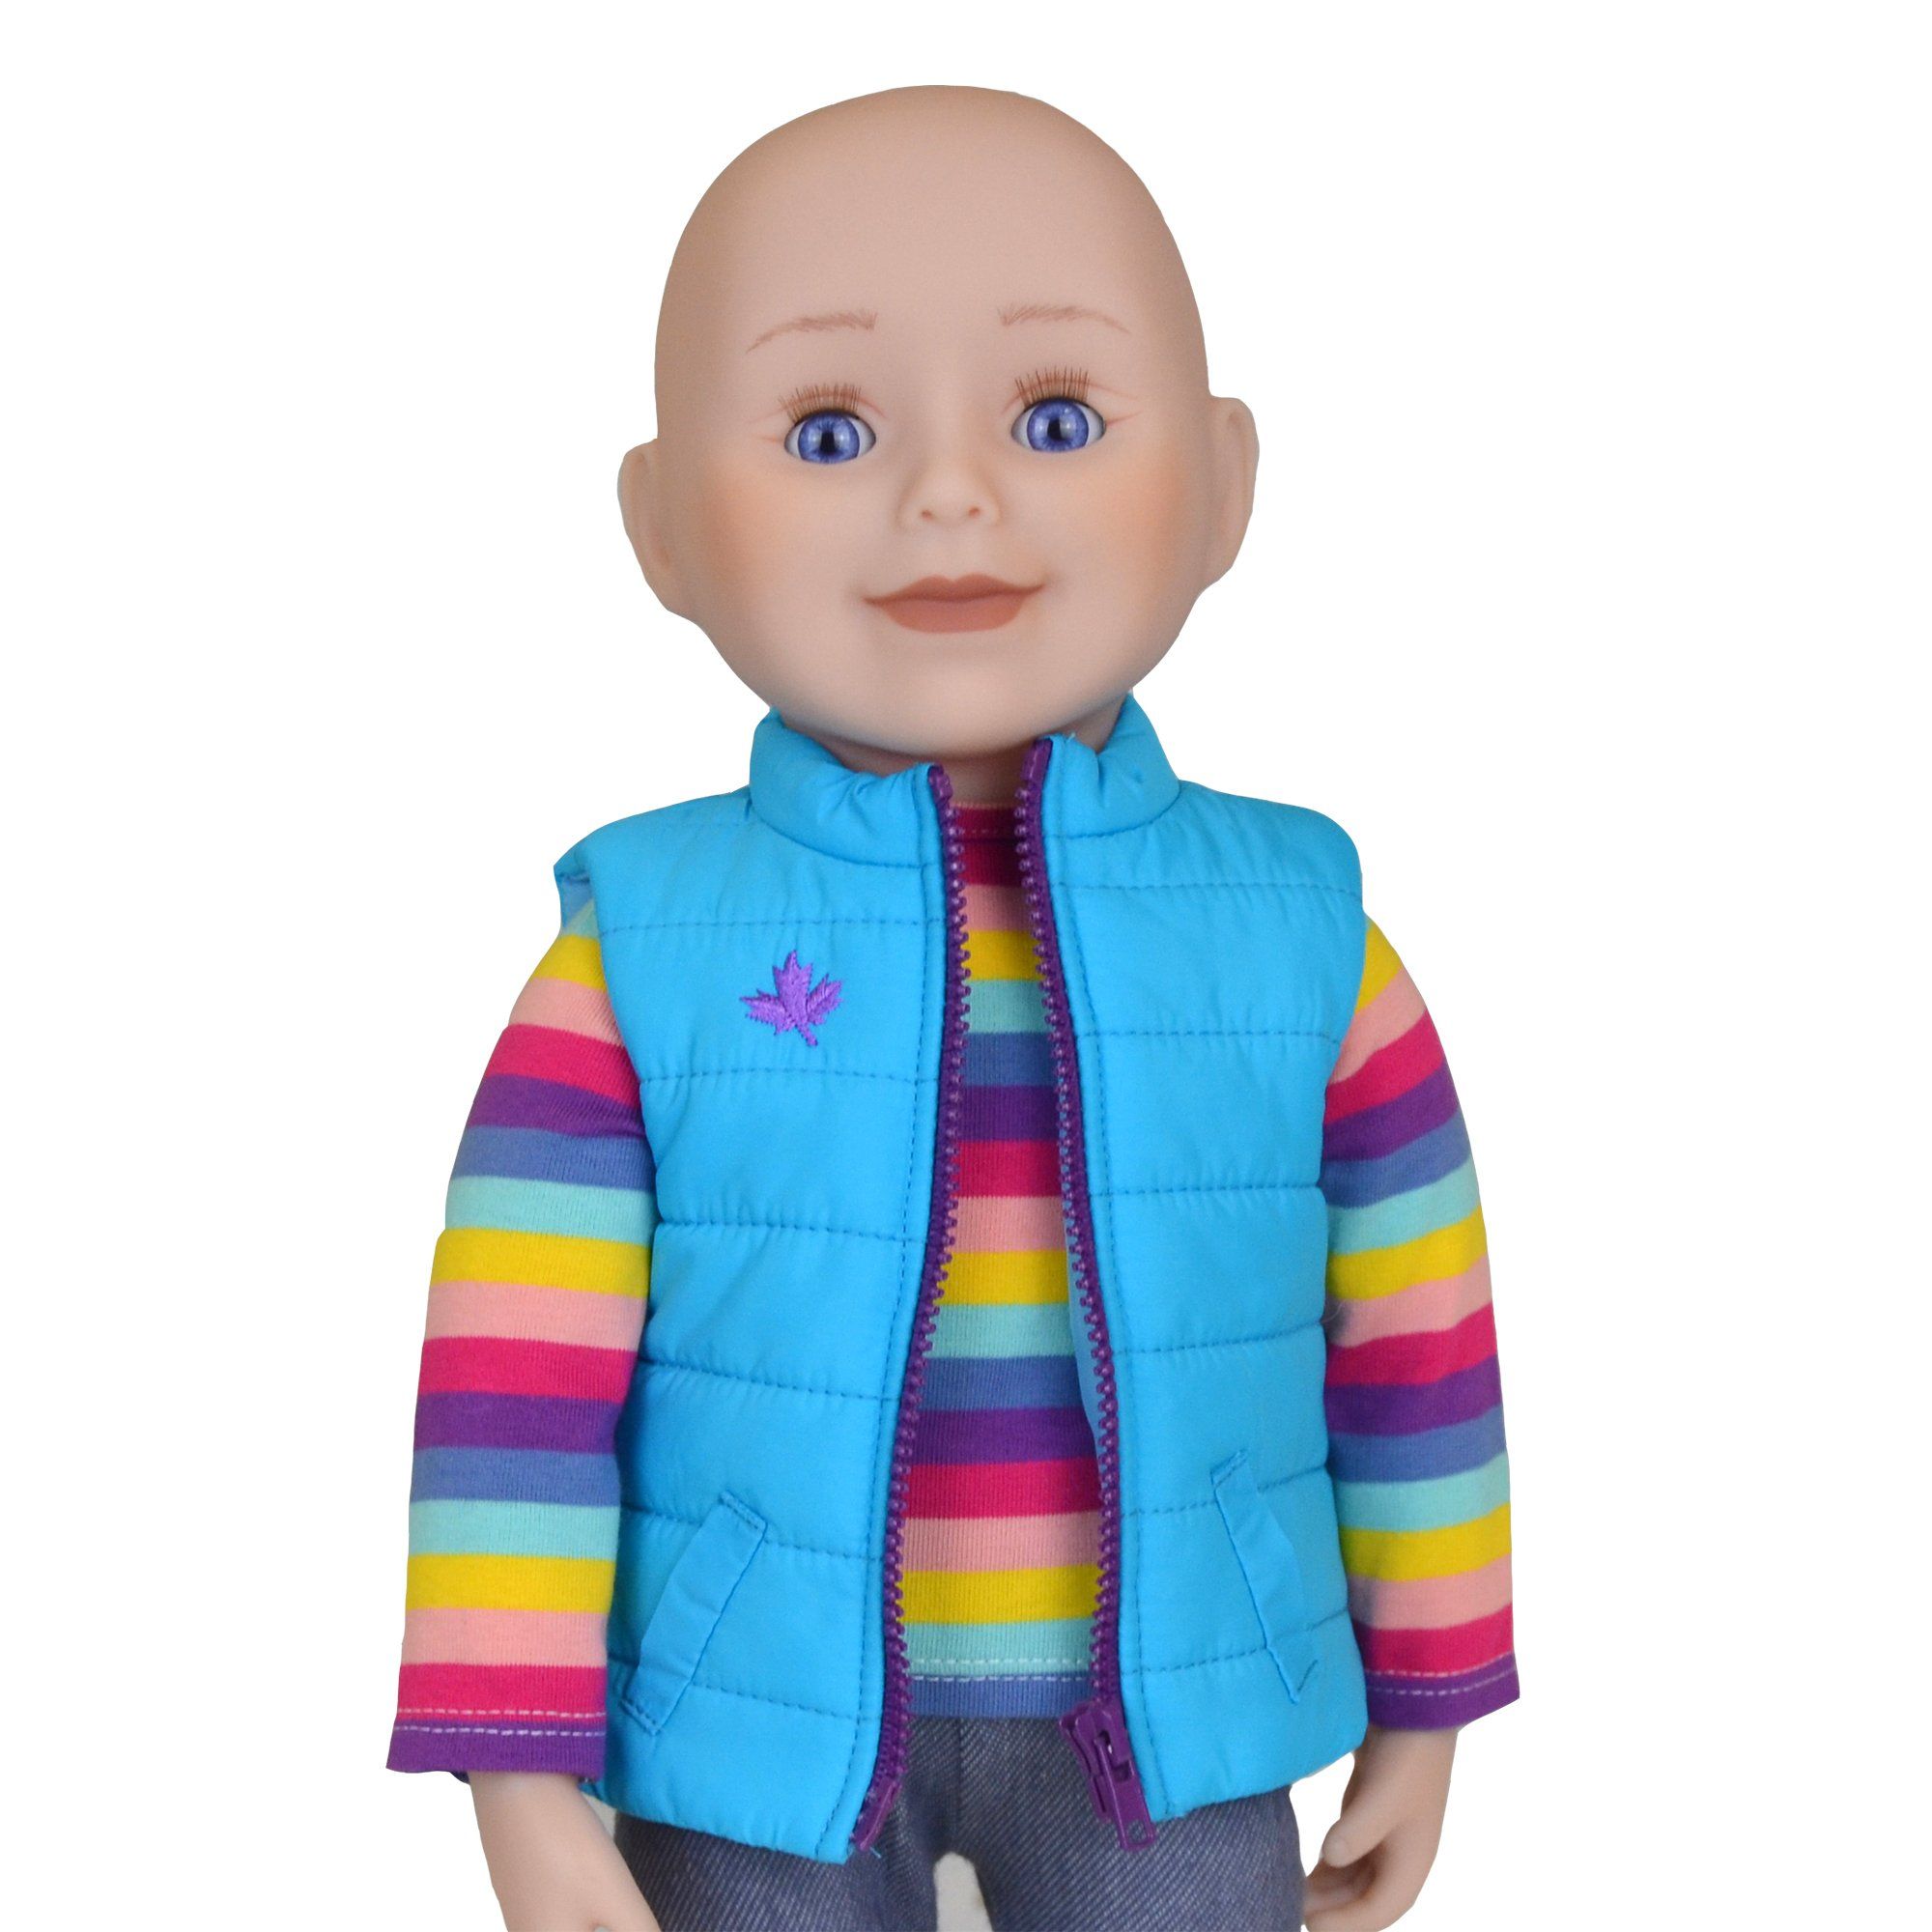 18 inch Maplelea doll with no hair, blue eyes and fair skin